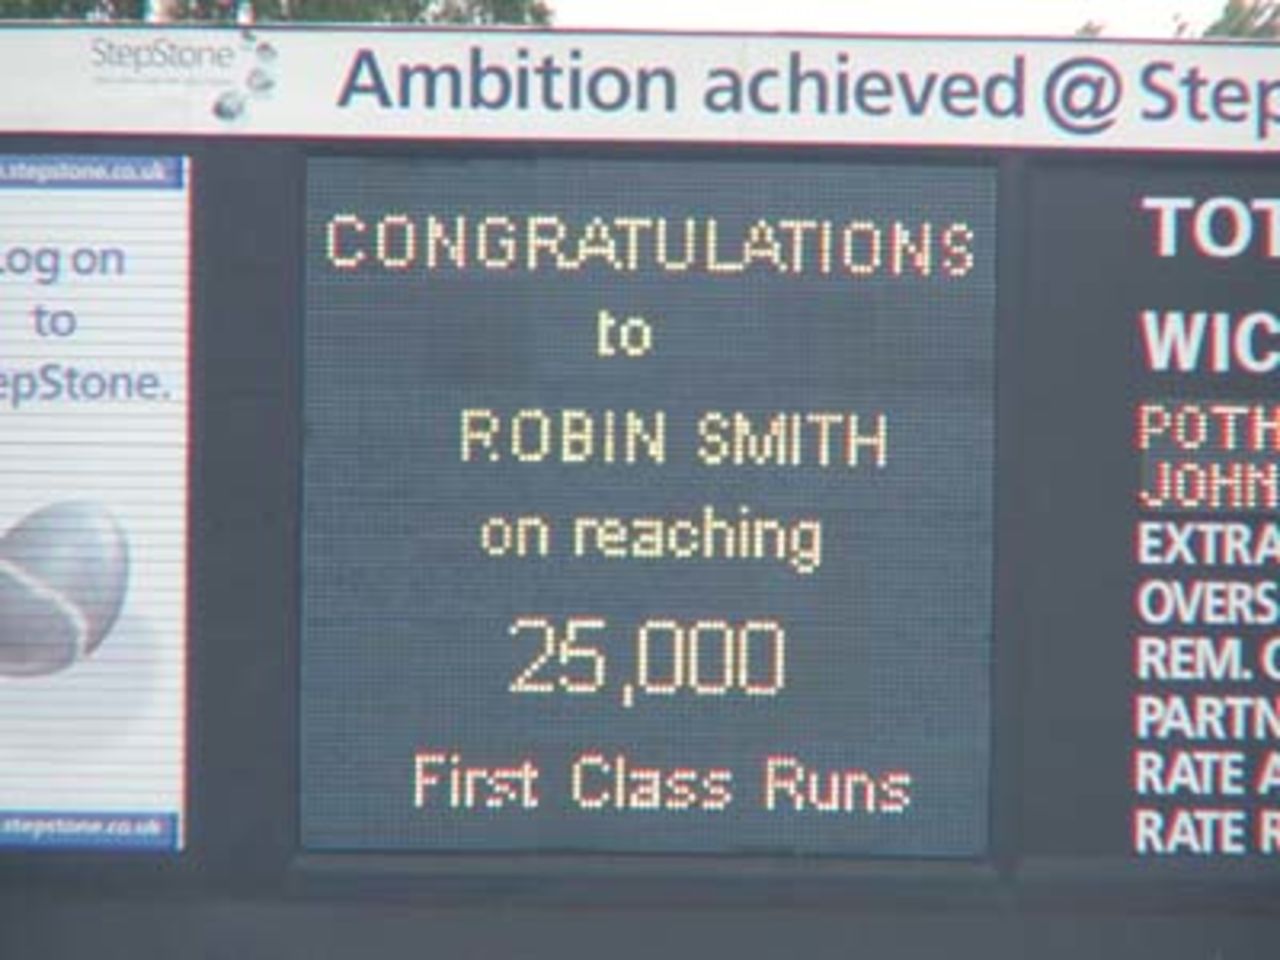 The Scoreboard at Edgbaston lights up Robin Smith's achievement of 25,000 first-class runs